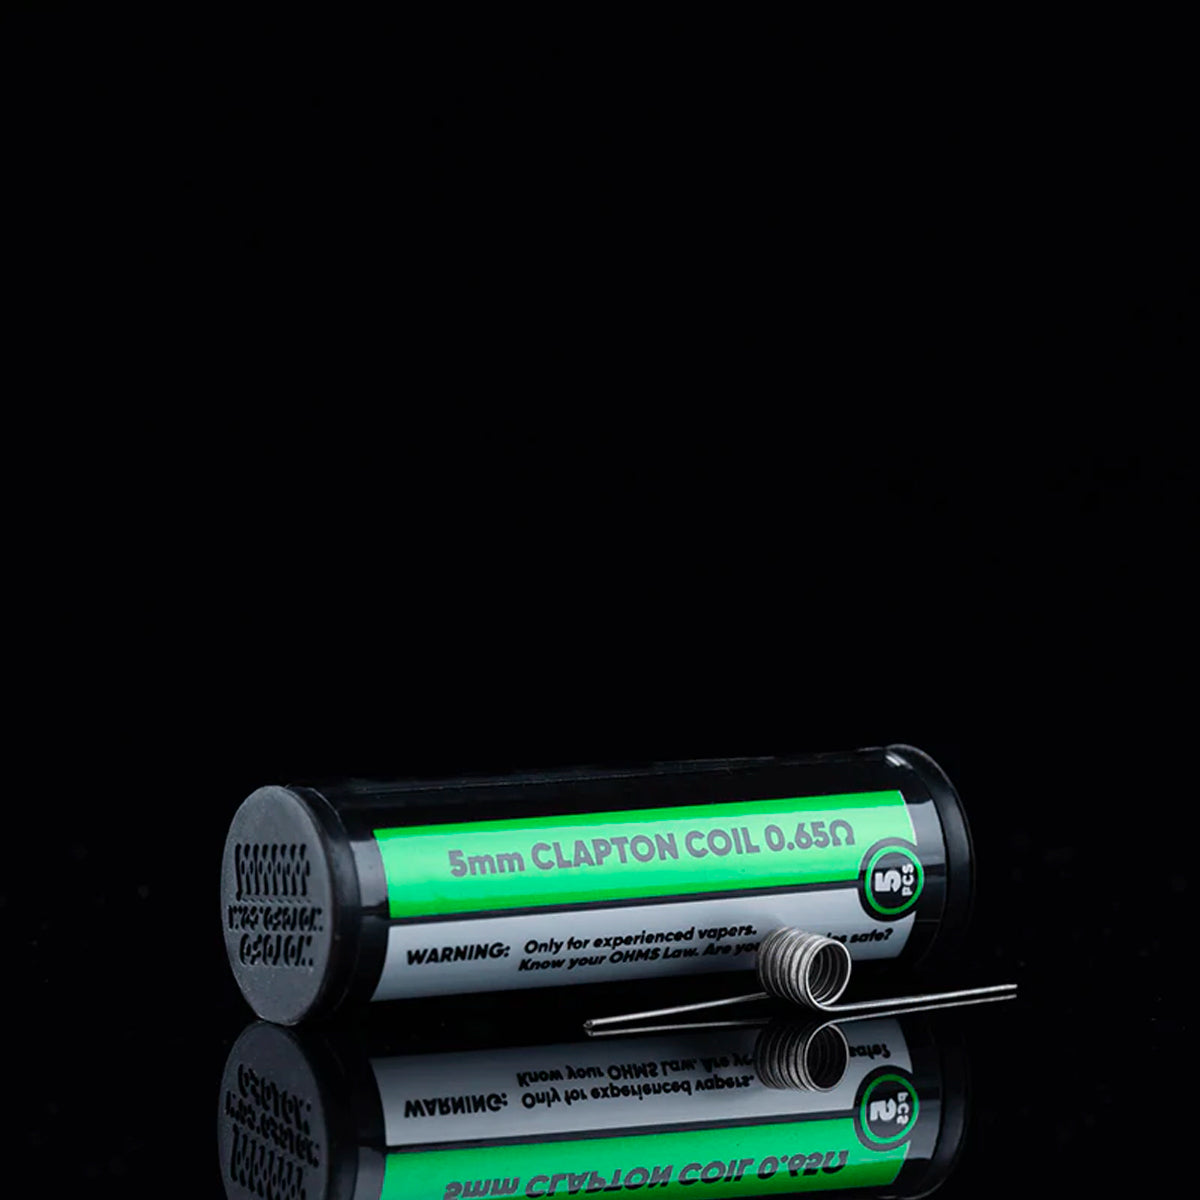 Wotofo 5mm ID Dual Core Clapton Prebuilt Coils Ni80 0.65Ω (2×26GA+38GA) 5個入 ウォトフォ プリビルドコイル クラプトン ニクロム80 電子タバコ 電子たばこ vape